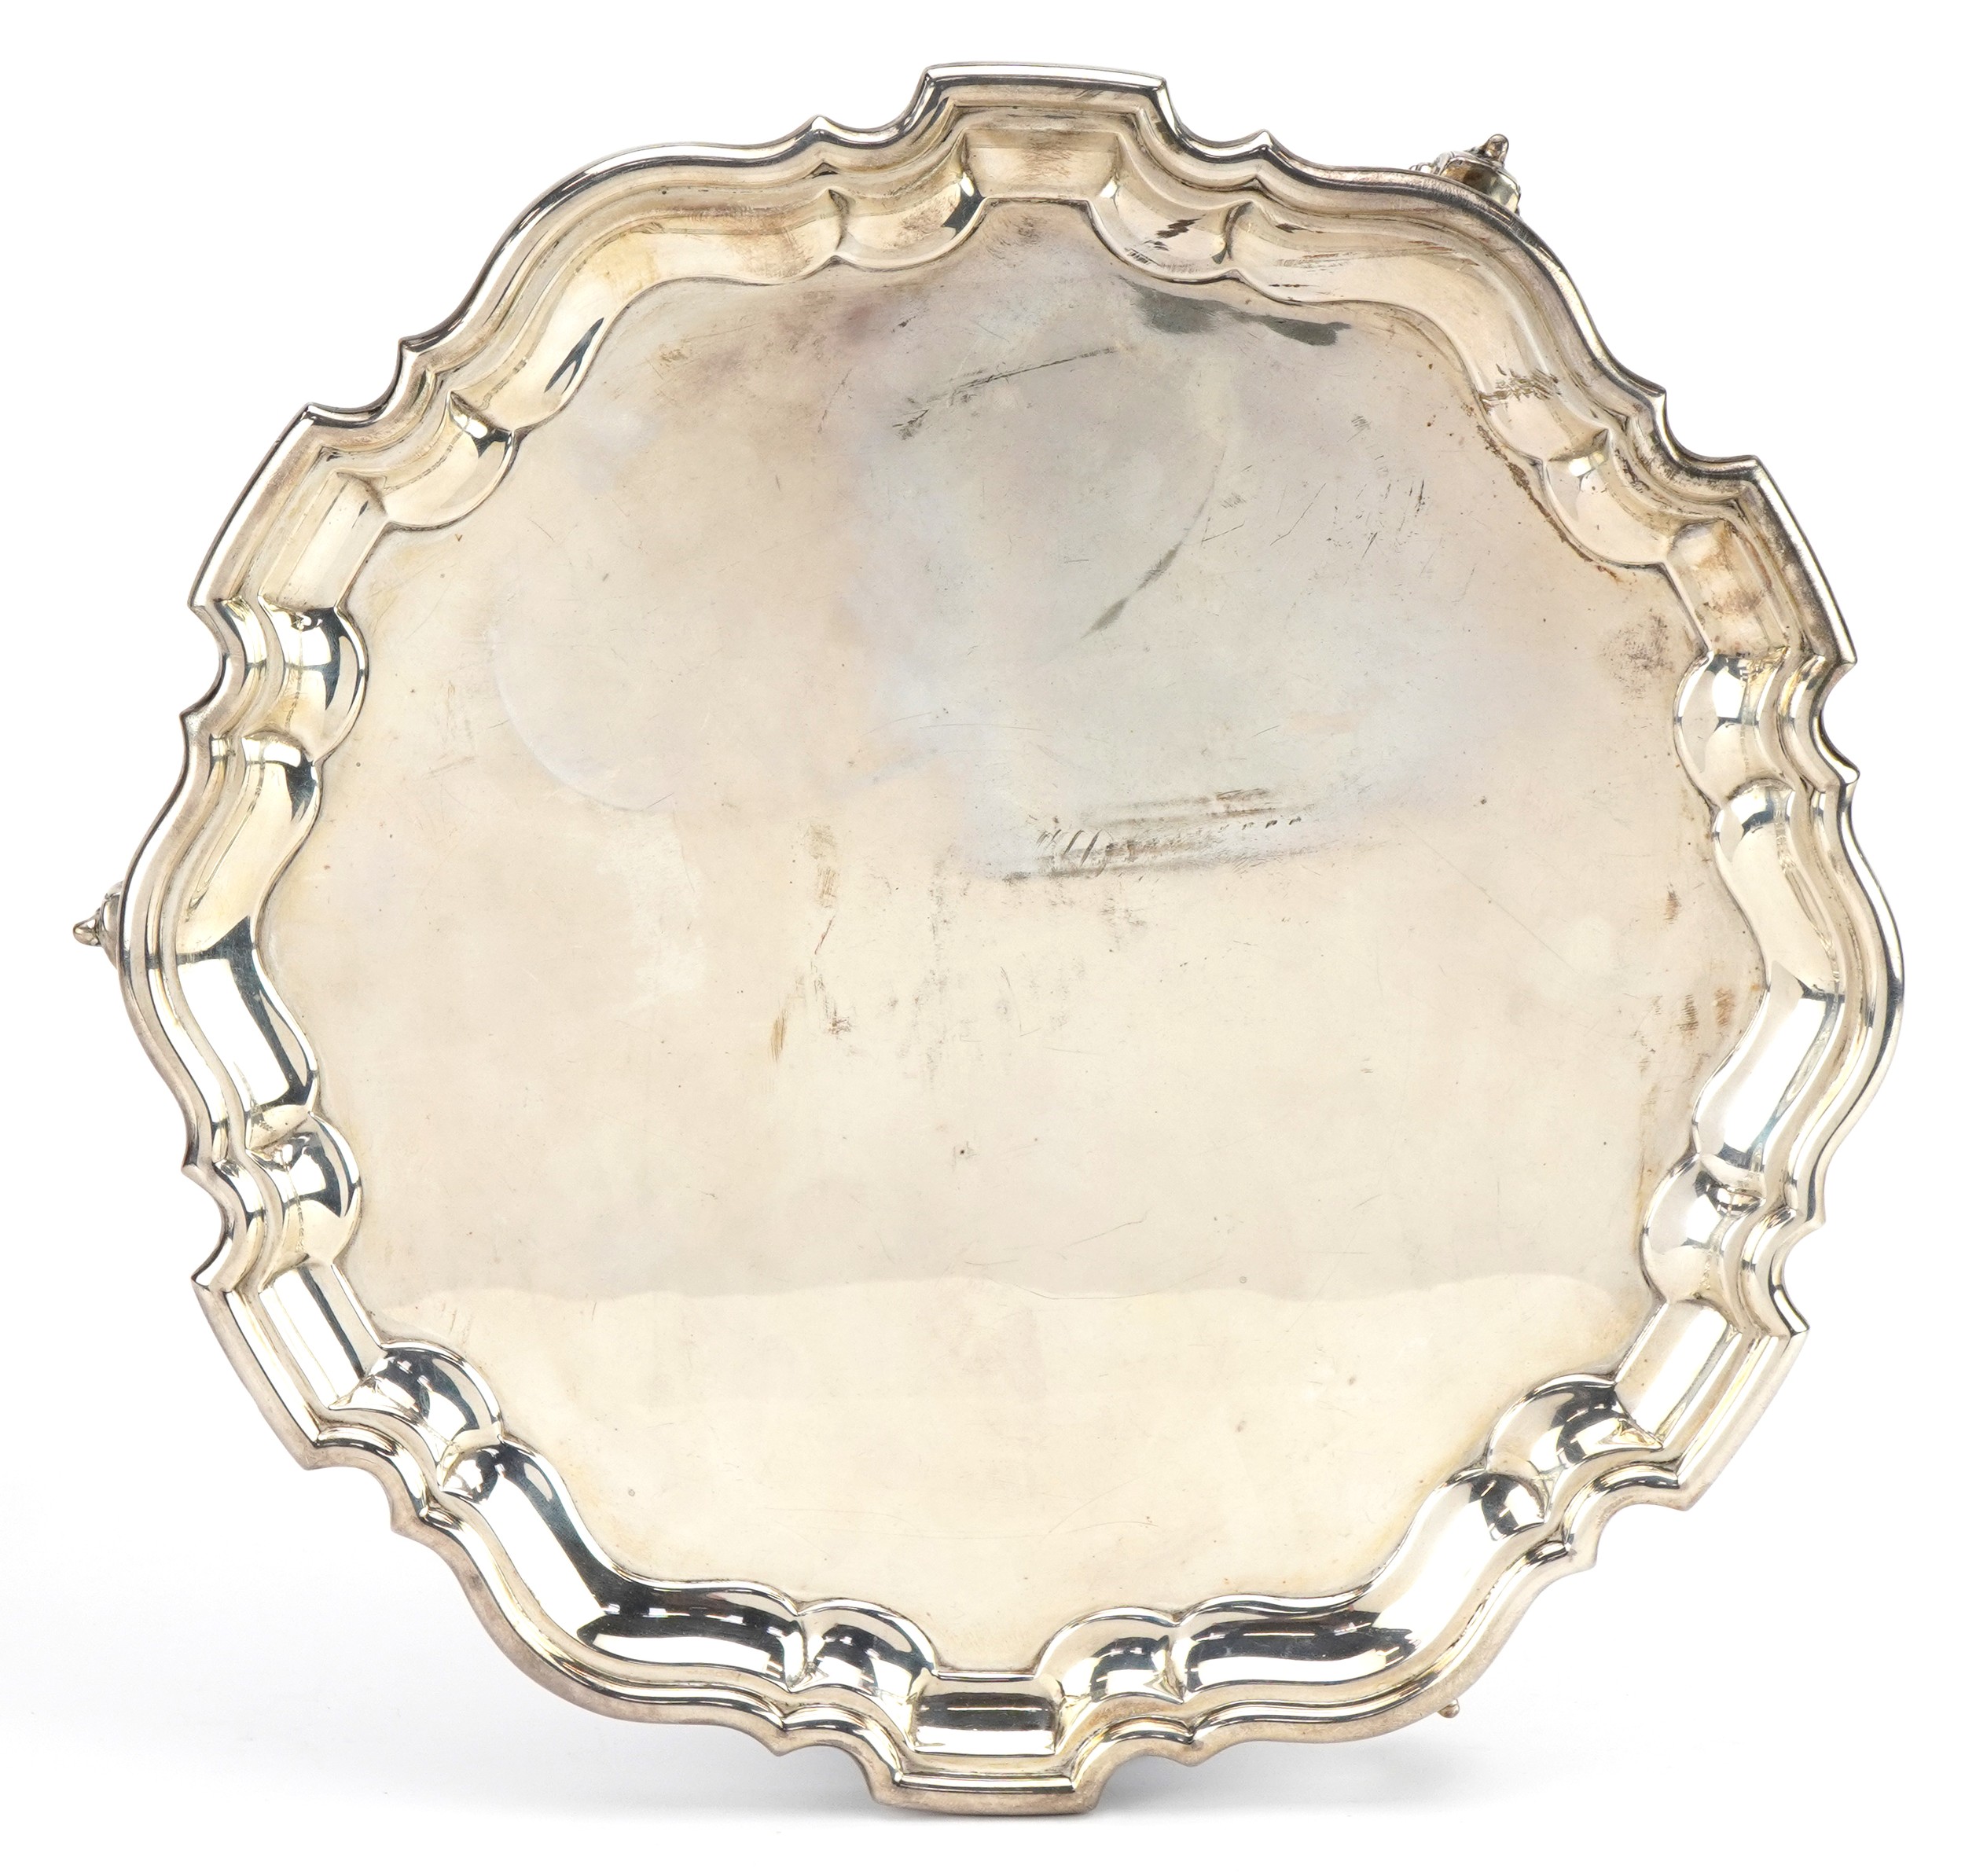 Martin Hall & Co Ltd, George V circular silver salver raised on three scrolled feet, Sheffield 1922, - Image 2 of 4